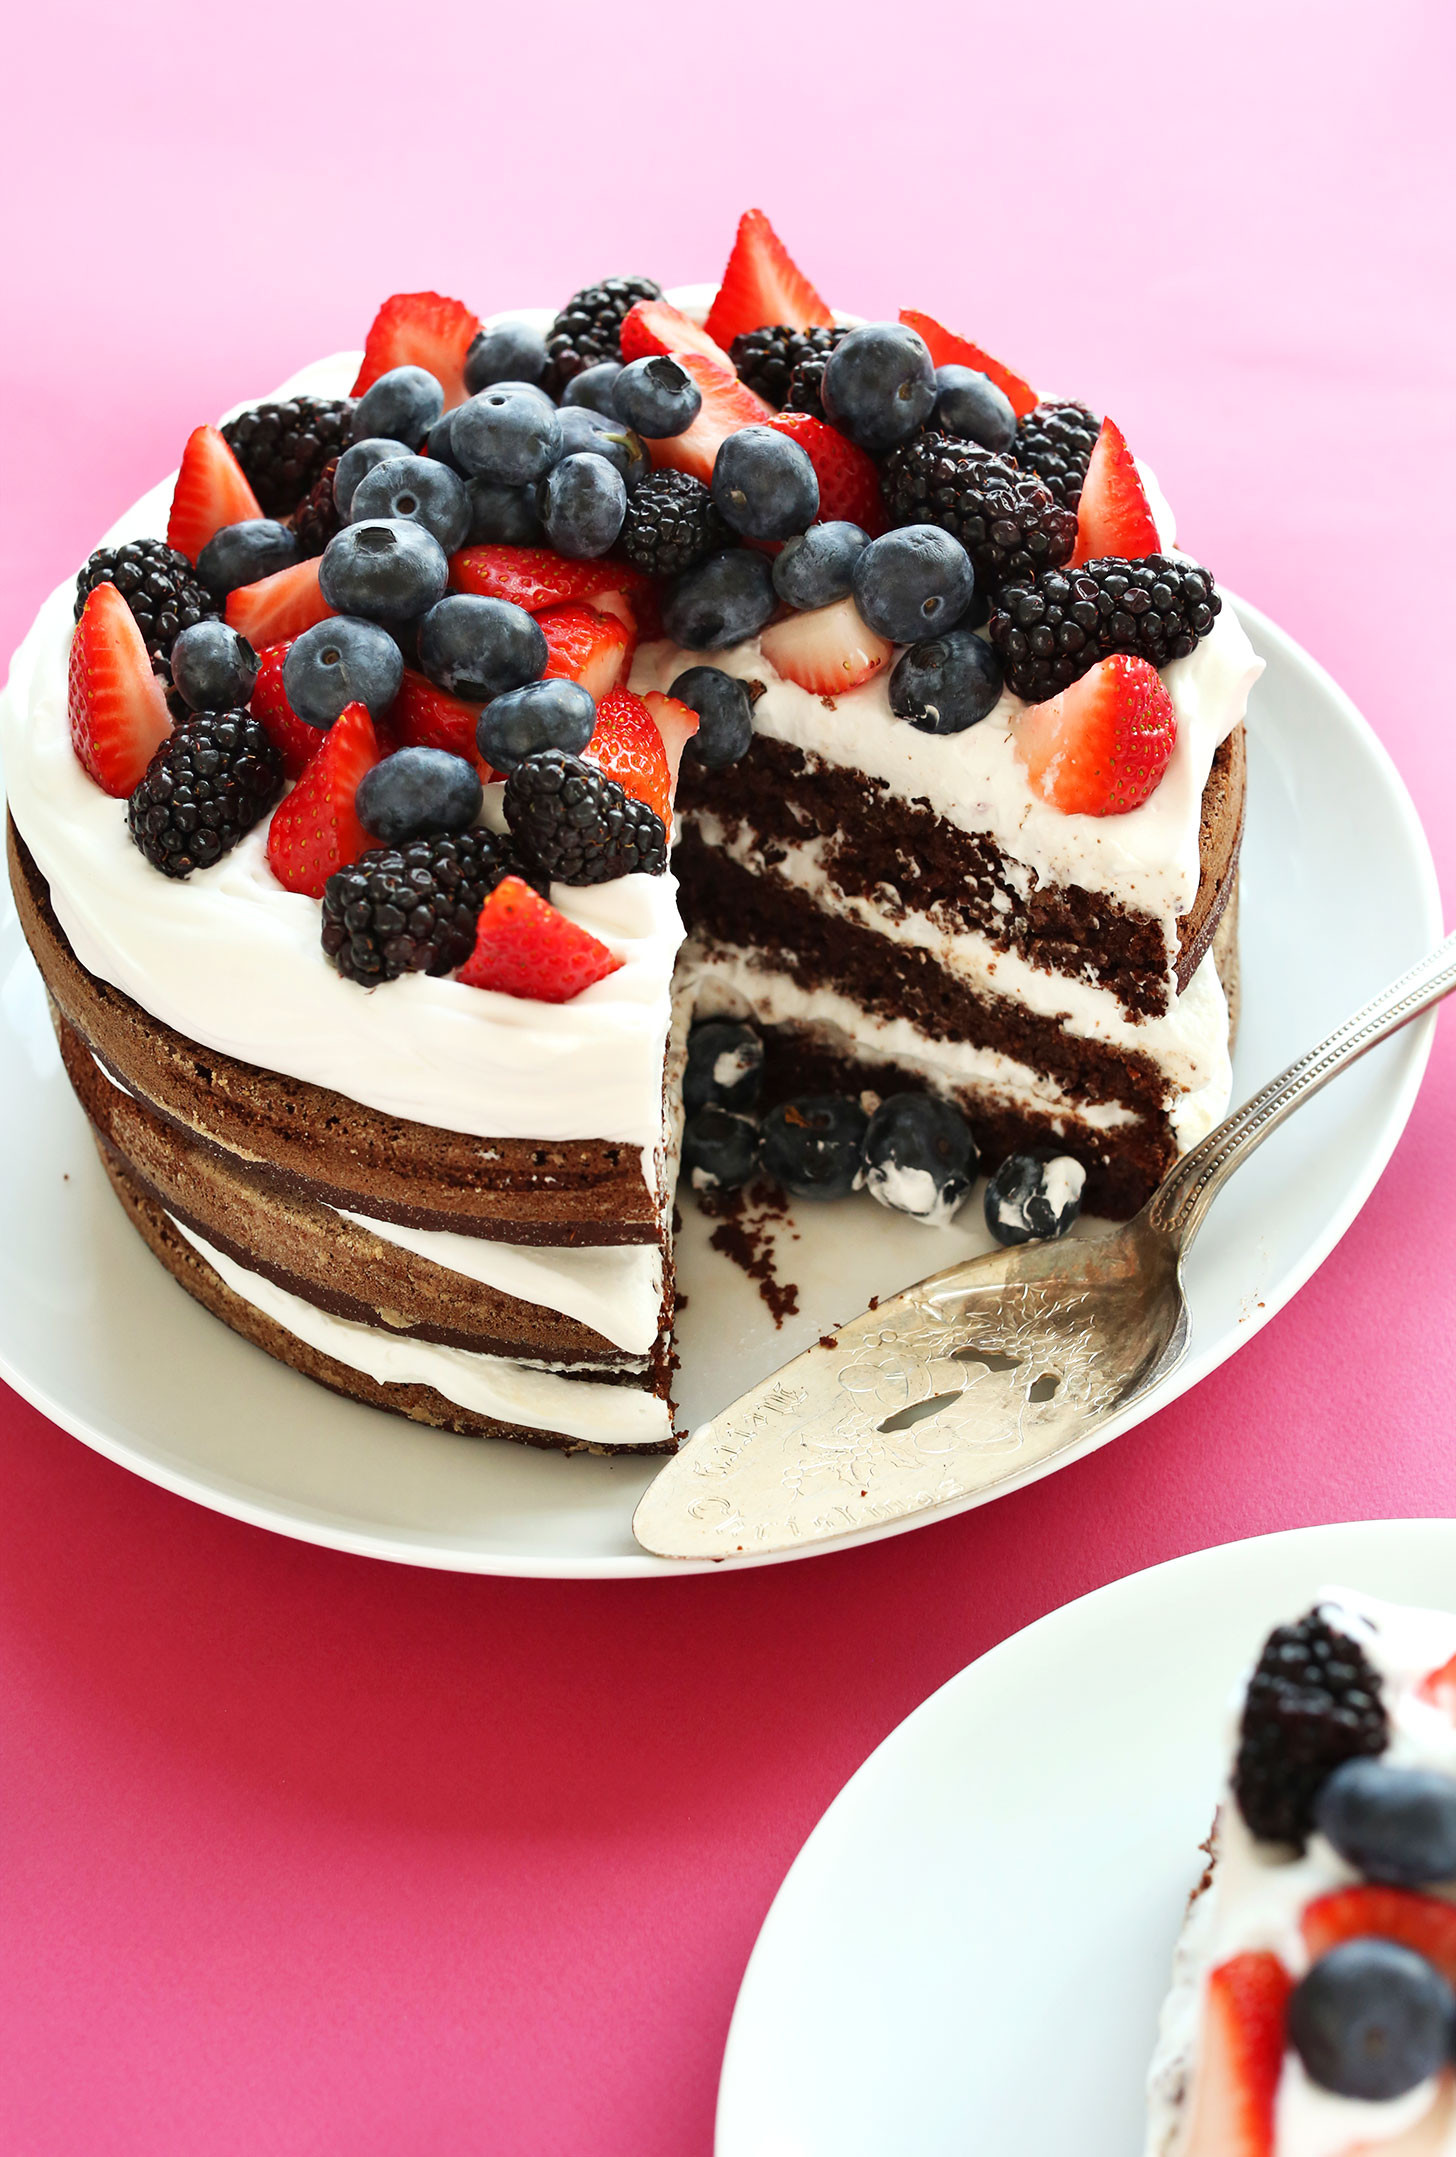 Best ideas about Vegan Birthday Cake Recipes
. Save or Pin Gluten Free Birthday Cake Now.